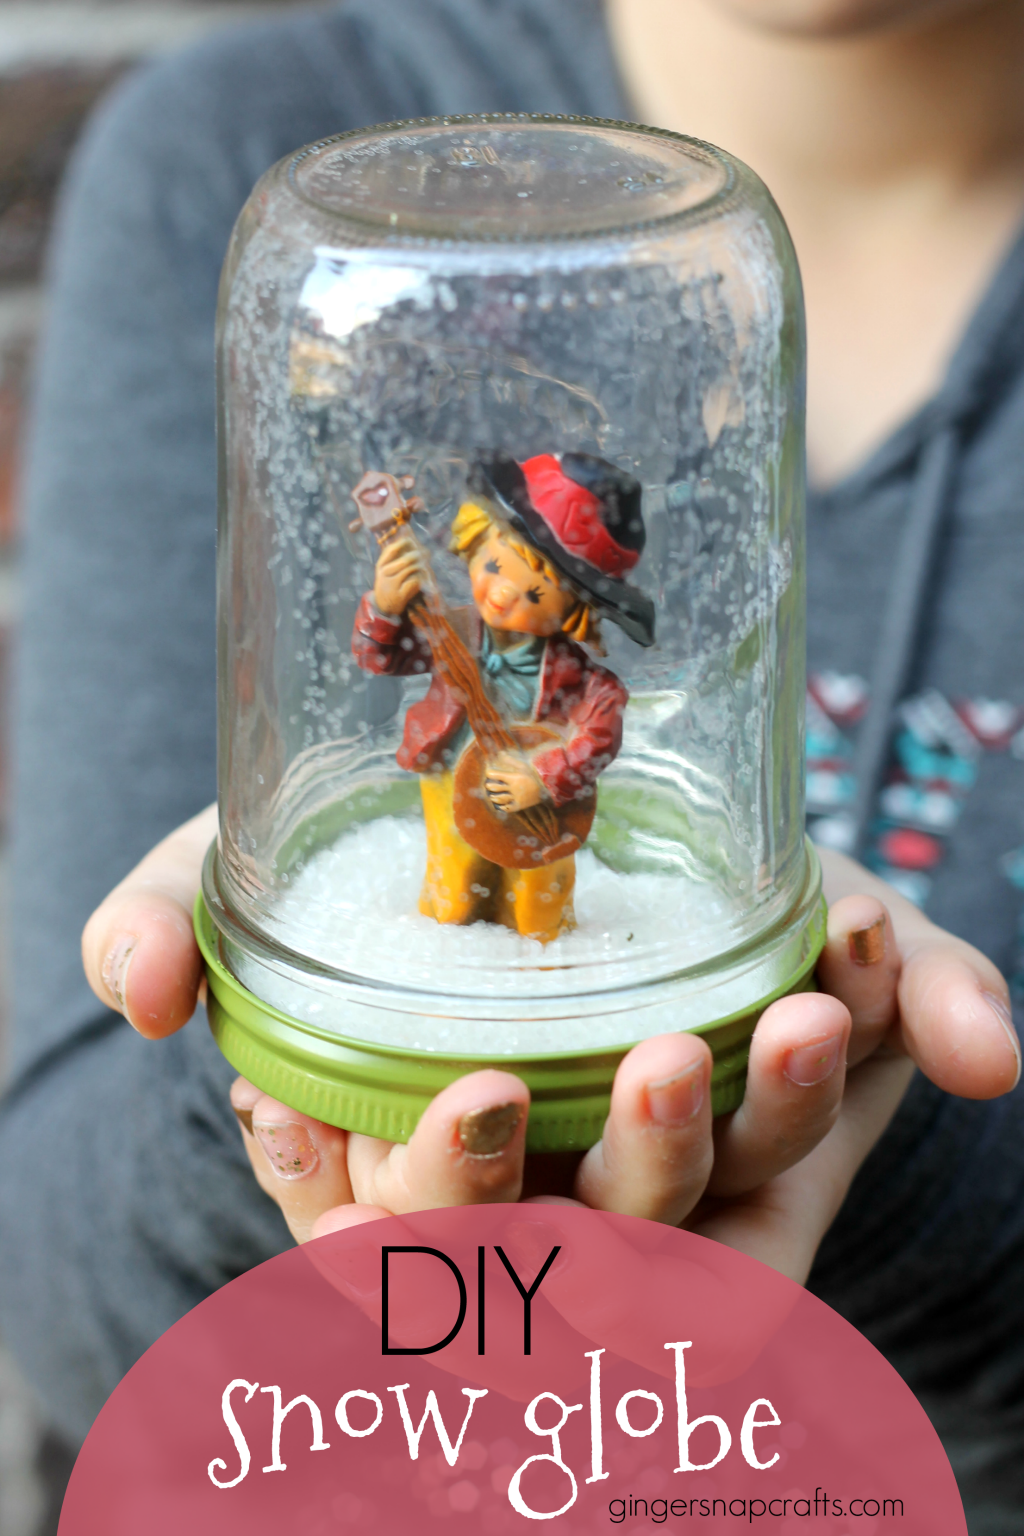 DIY Snow Globe - A fun kids activity or Christmas decor.